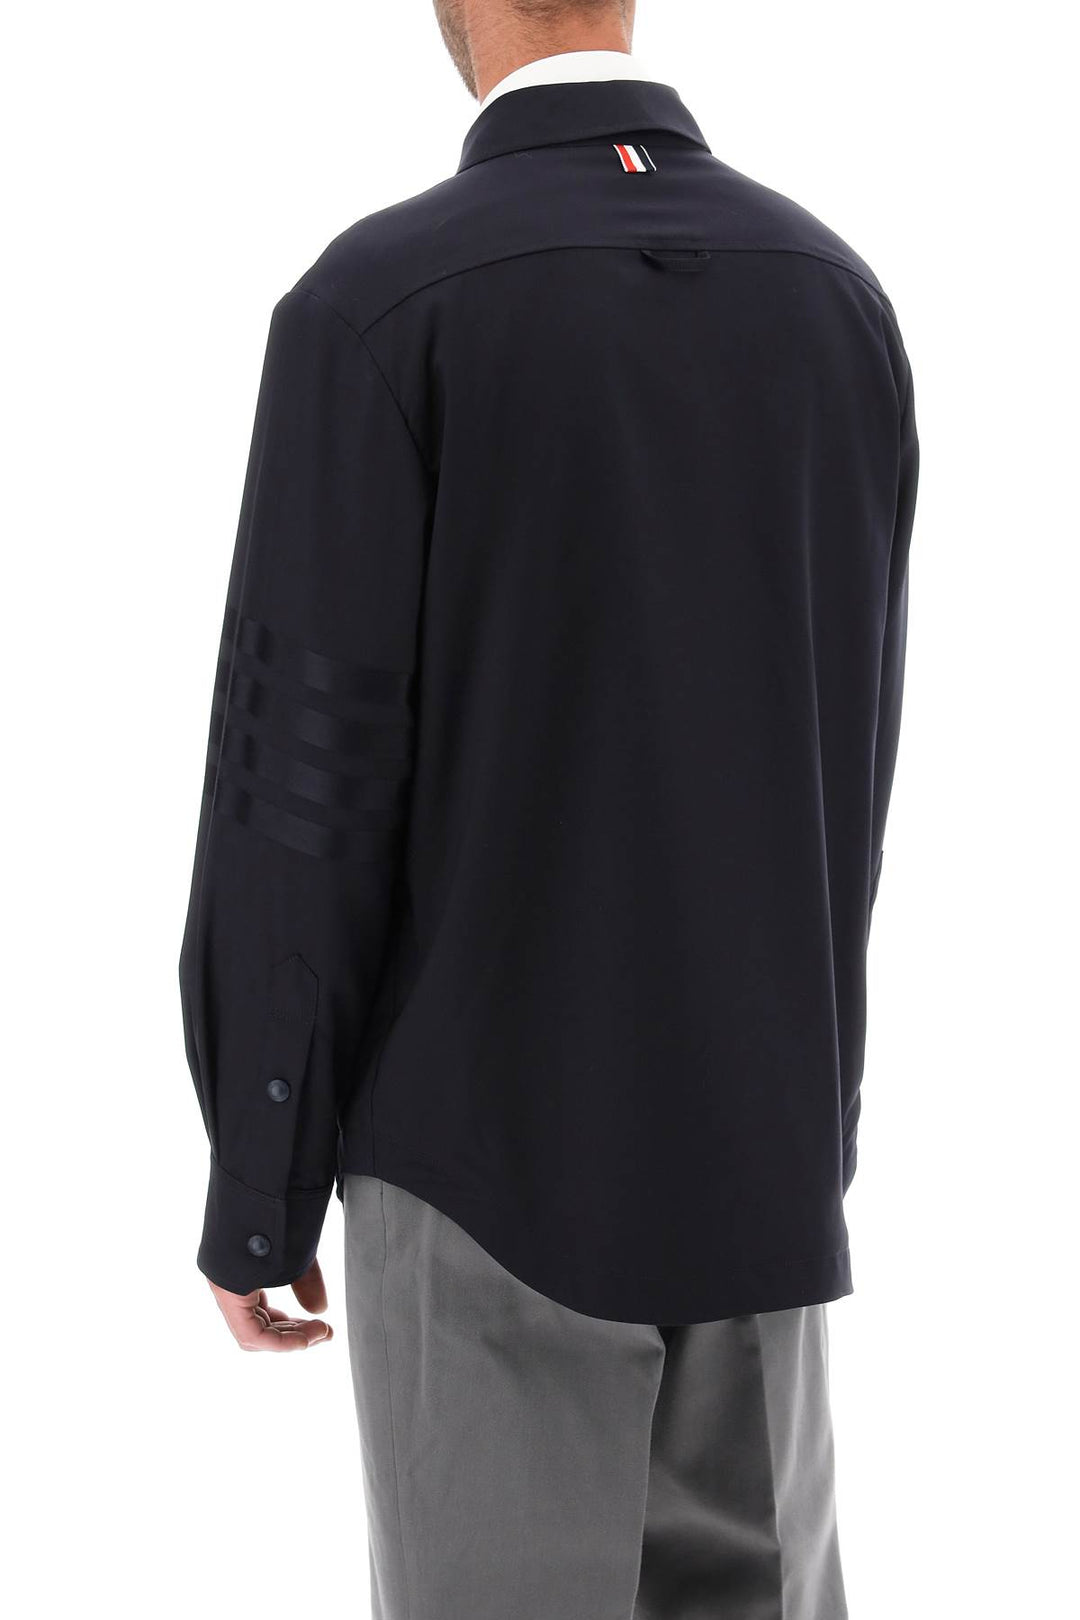 Thom Browne 4 Bar Shirt In Light Wool   Blu